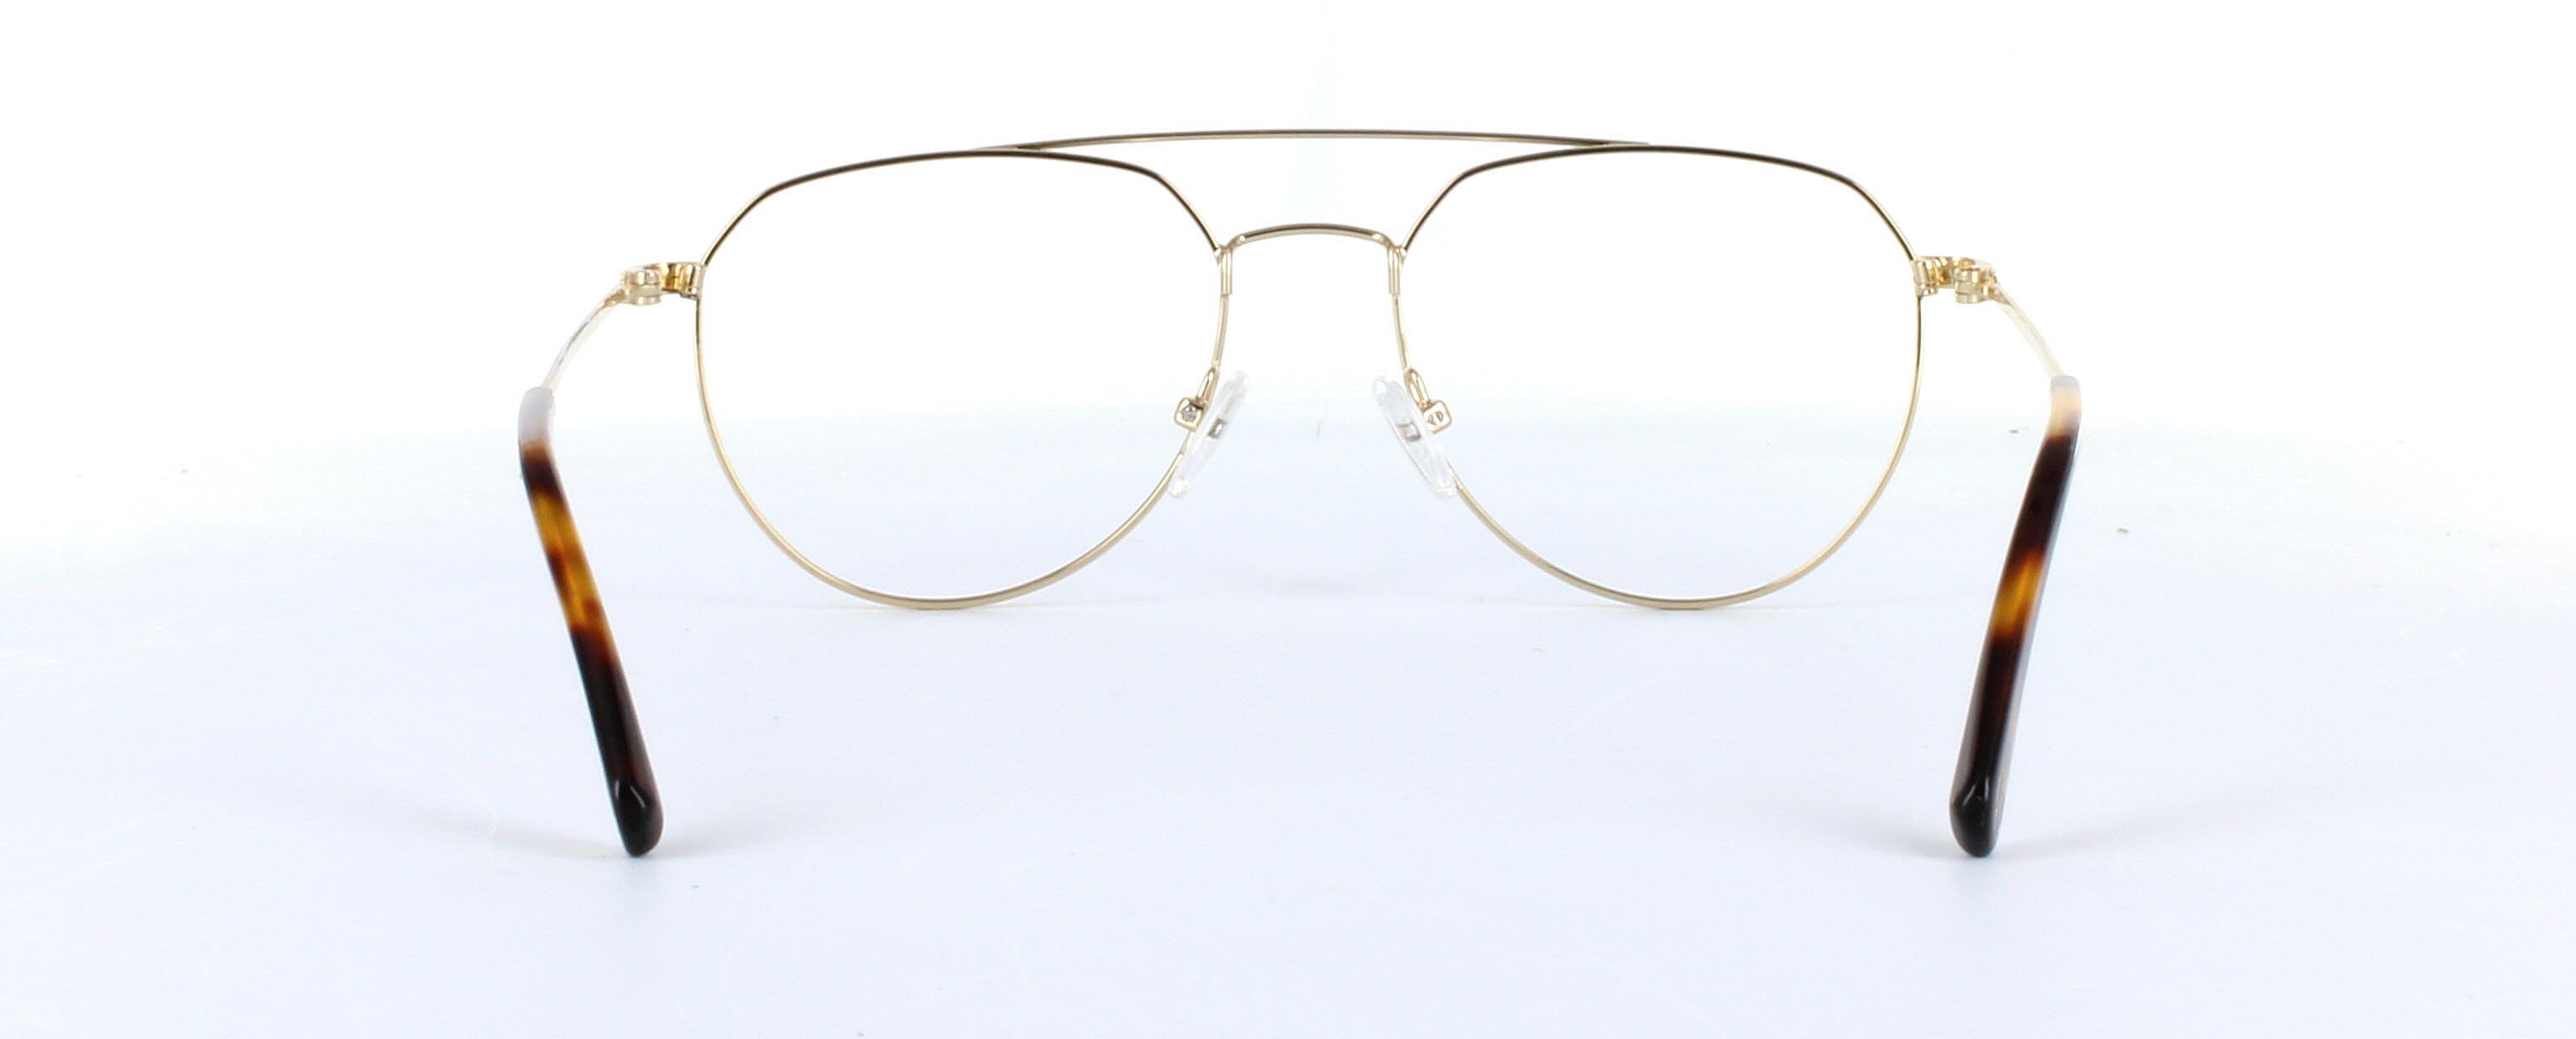 Eyecroxx 597 Black and Gold Full Rim Aviator Metal Glasses - Image View 3